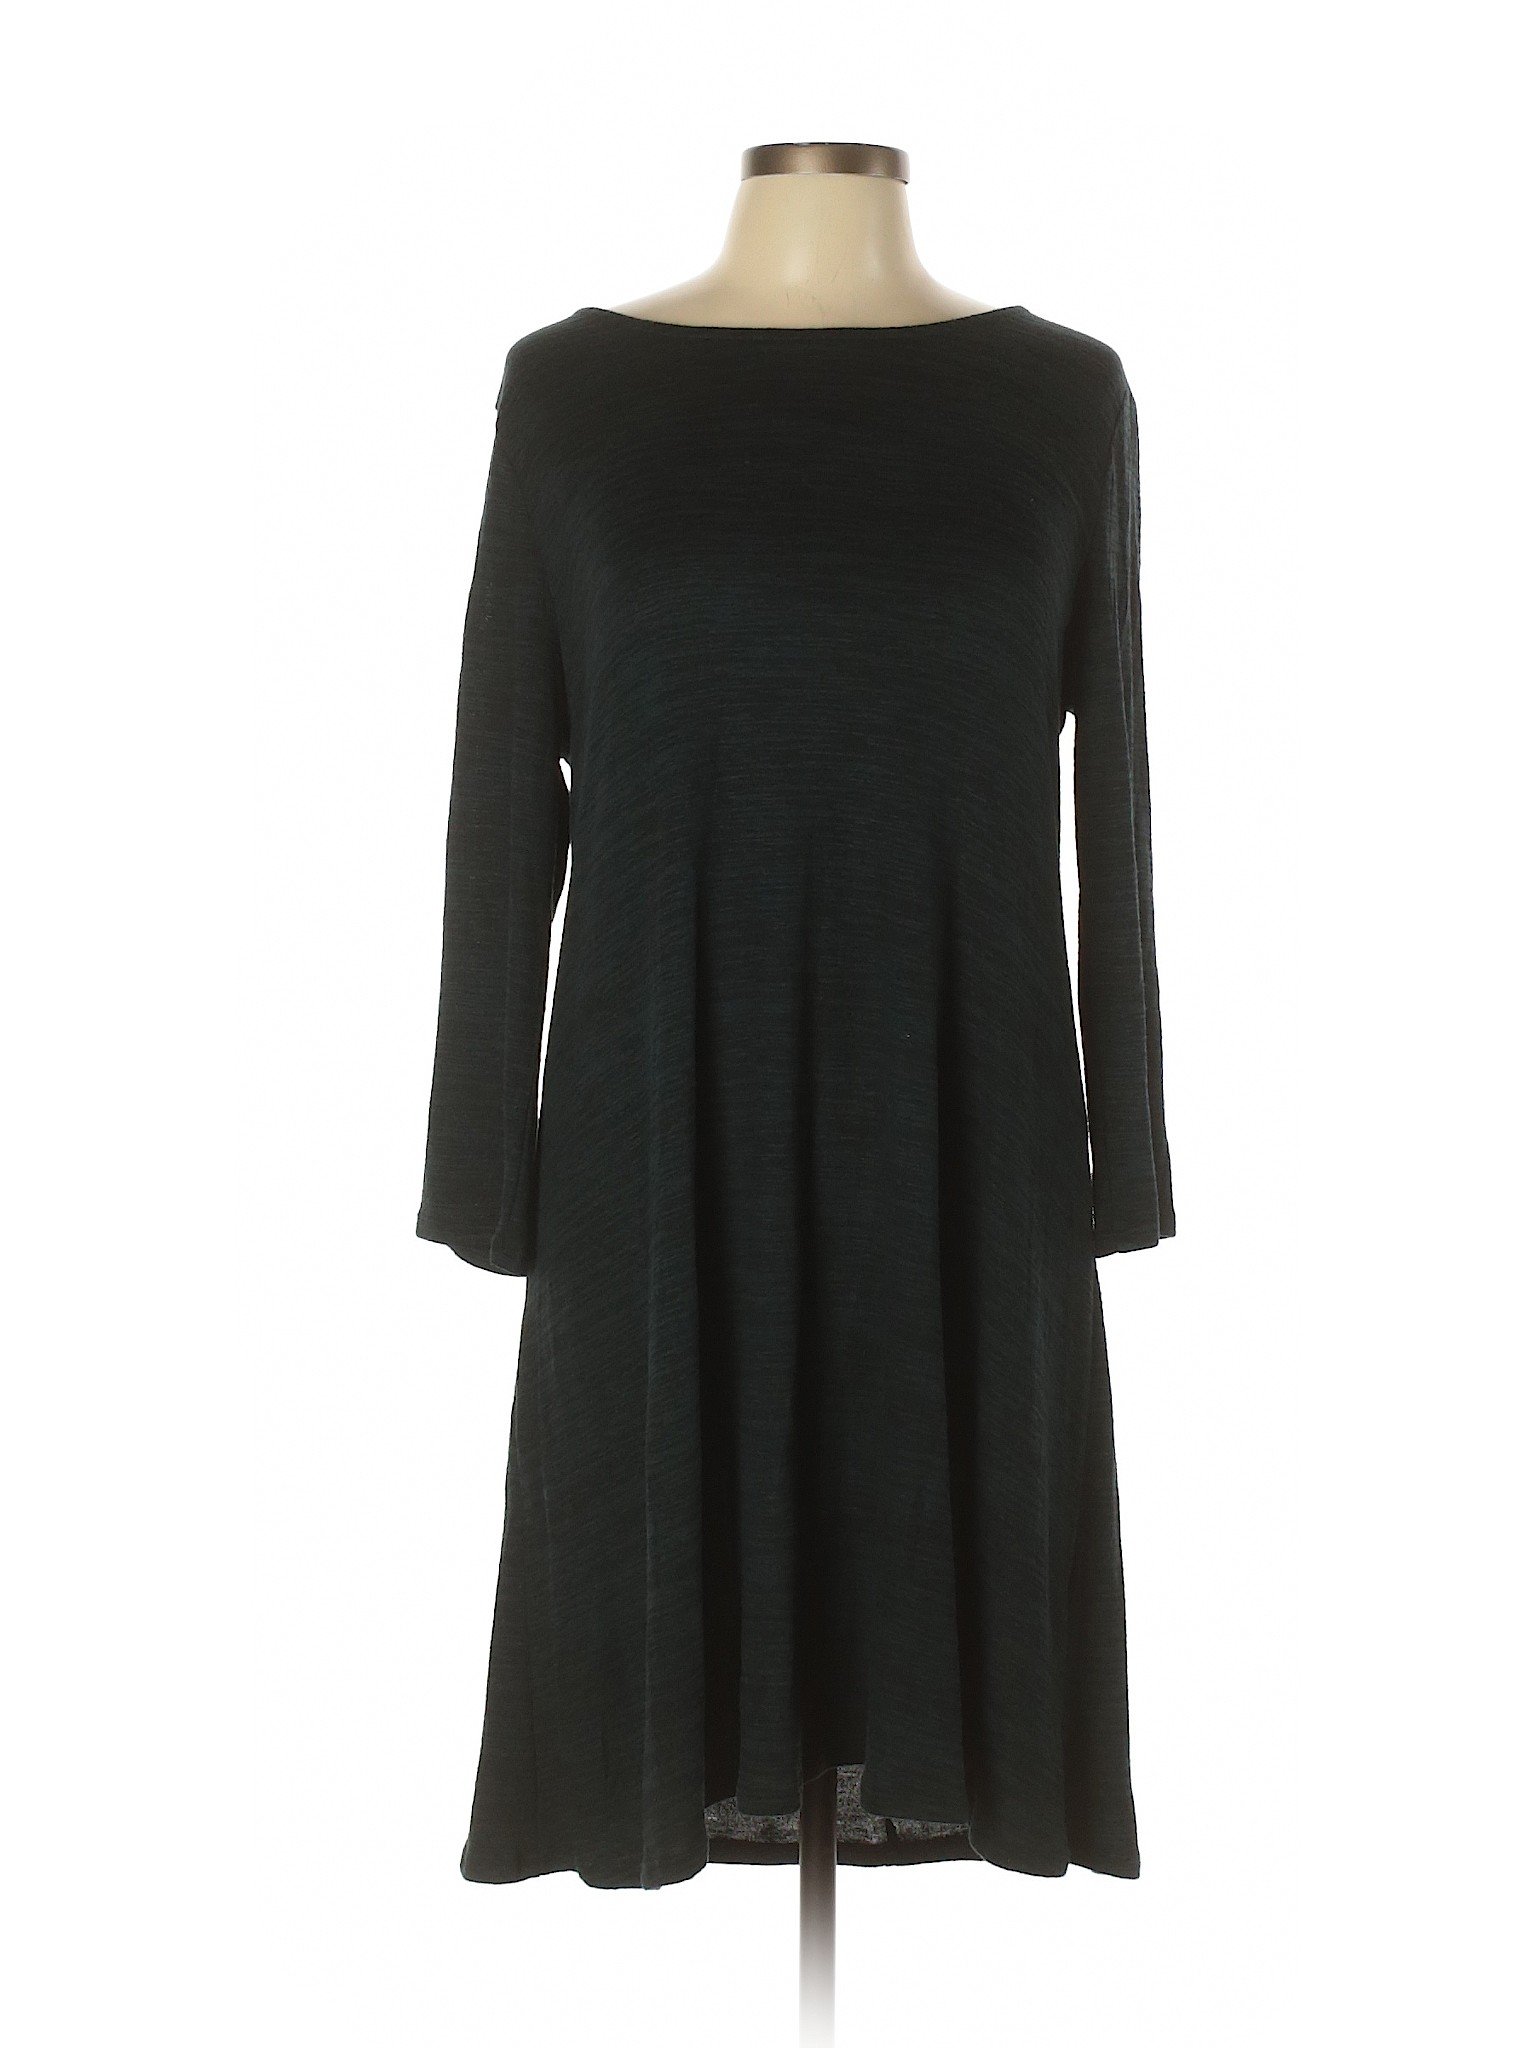 Apt. 9 Women Black Casual Dress L | eBay